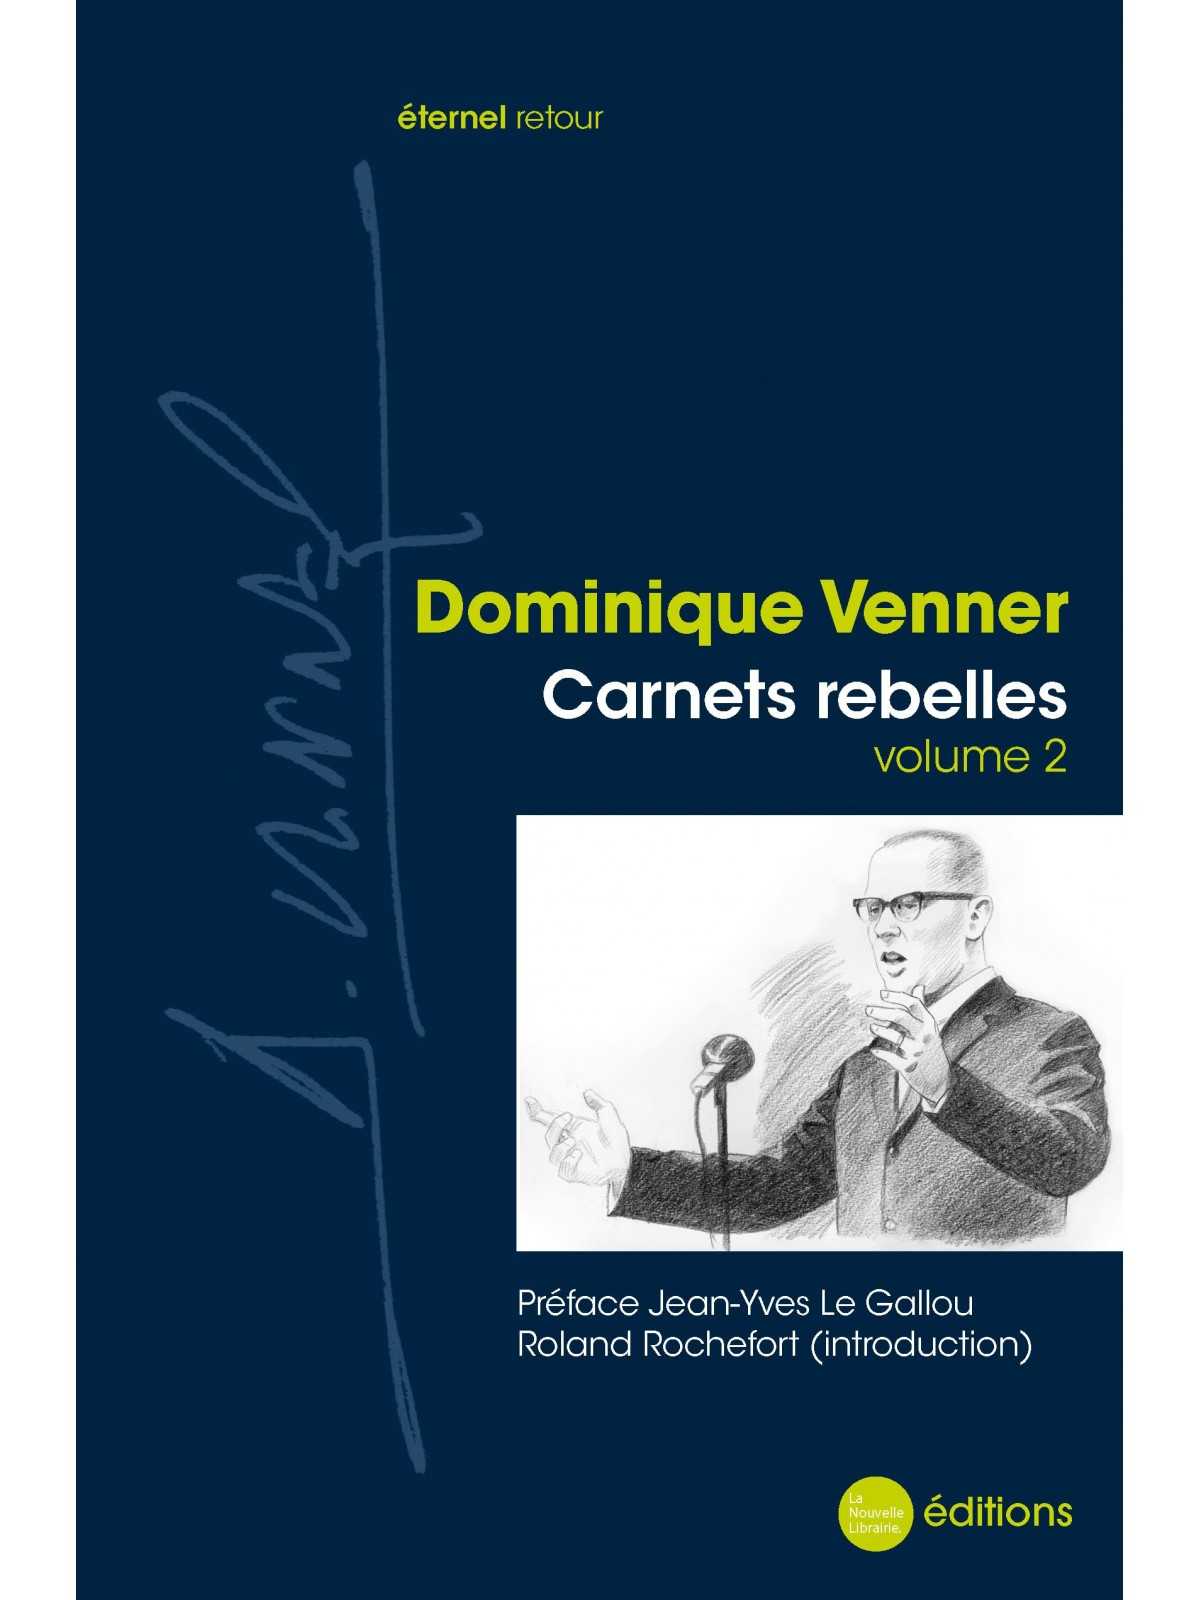 Dominique Venner : Carnets rebelles (volume 2)